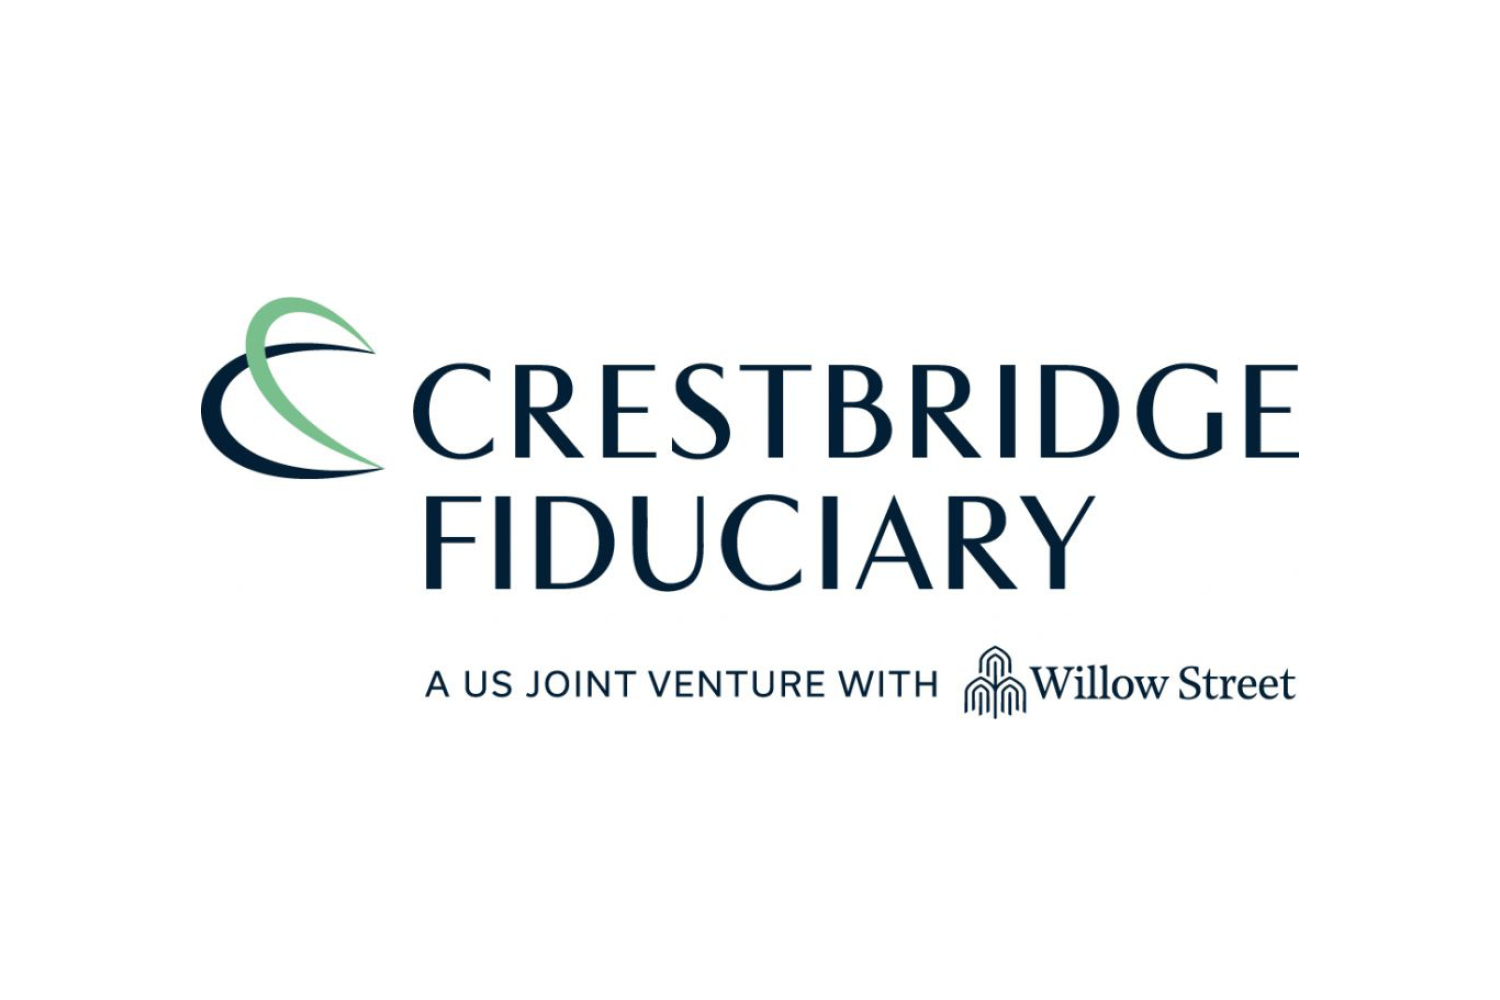 Crestbridge Fiduciary